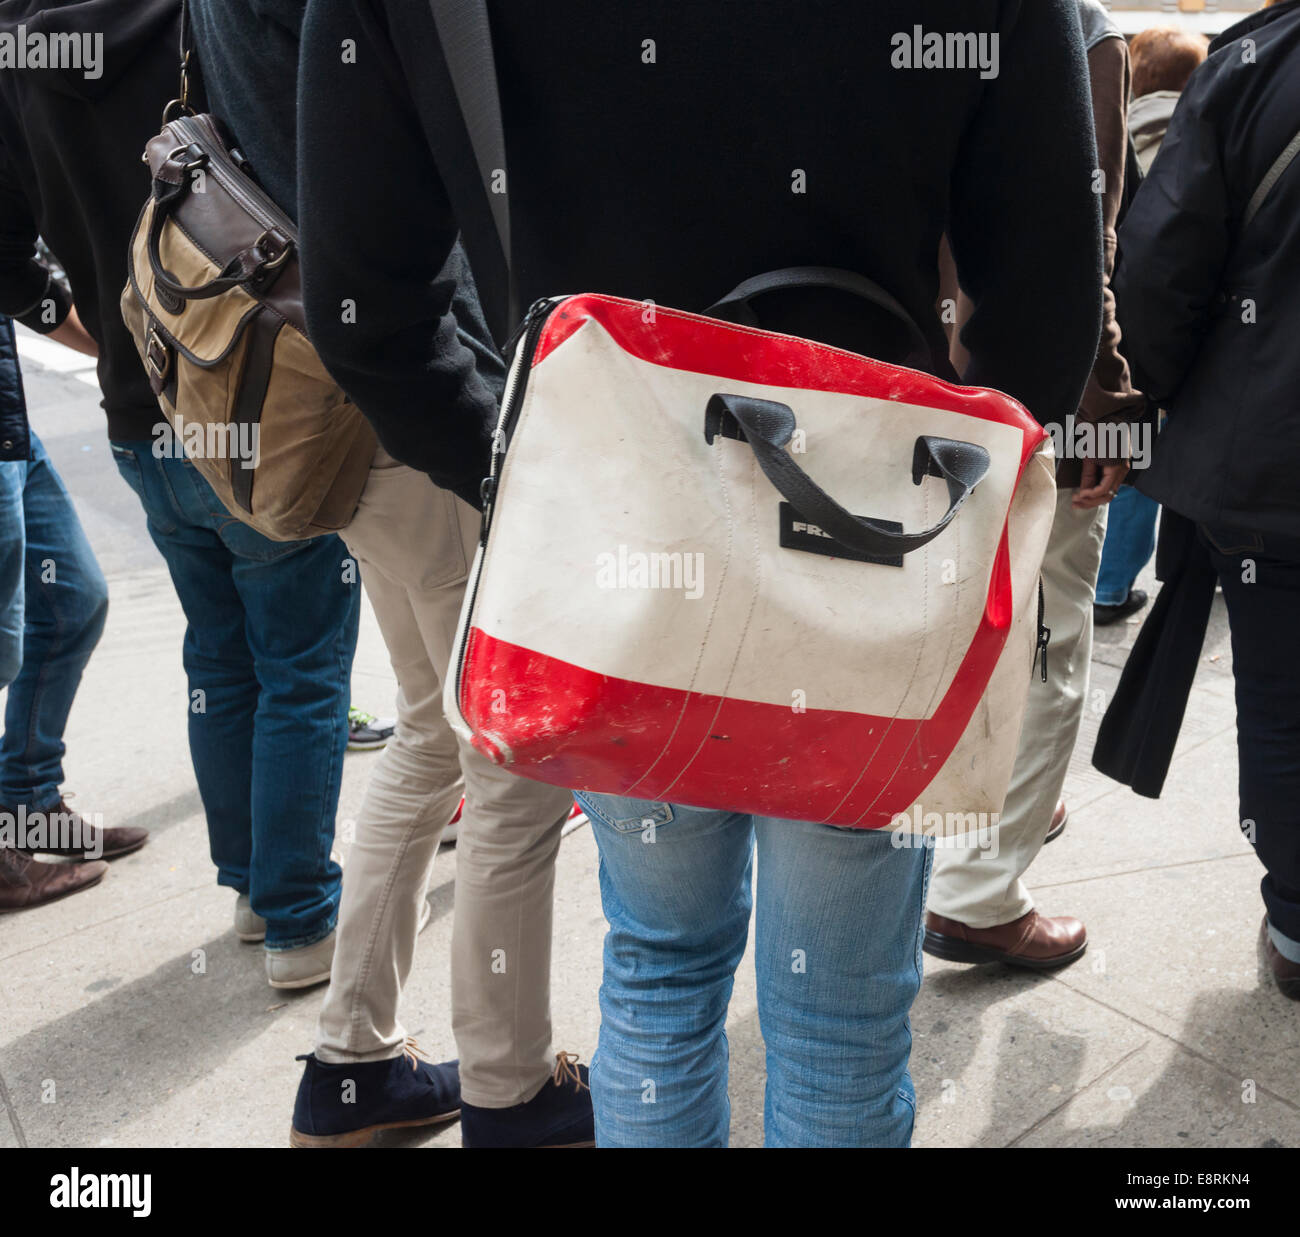 A Freitag messenger bag in New York Stock Photo - Alamy